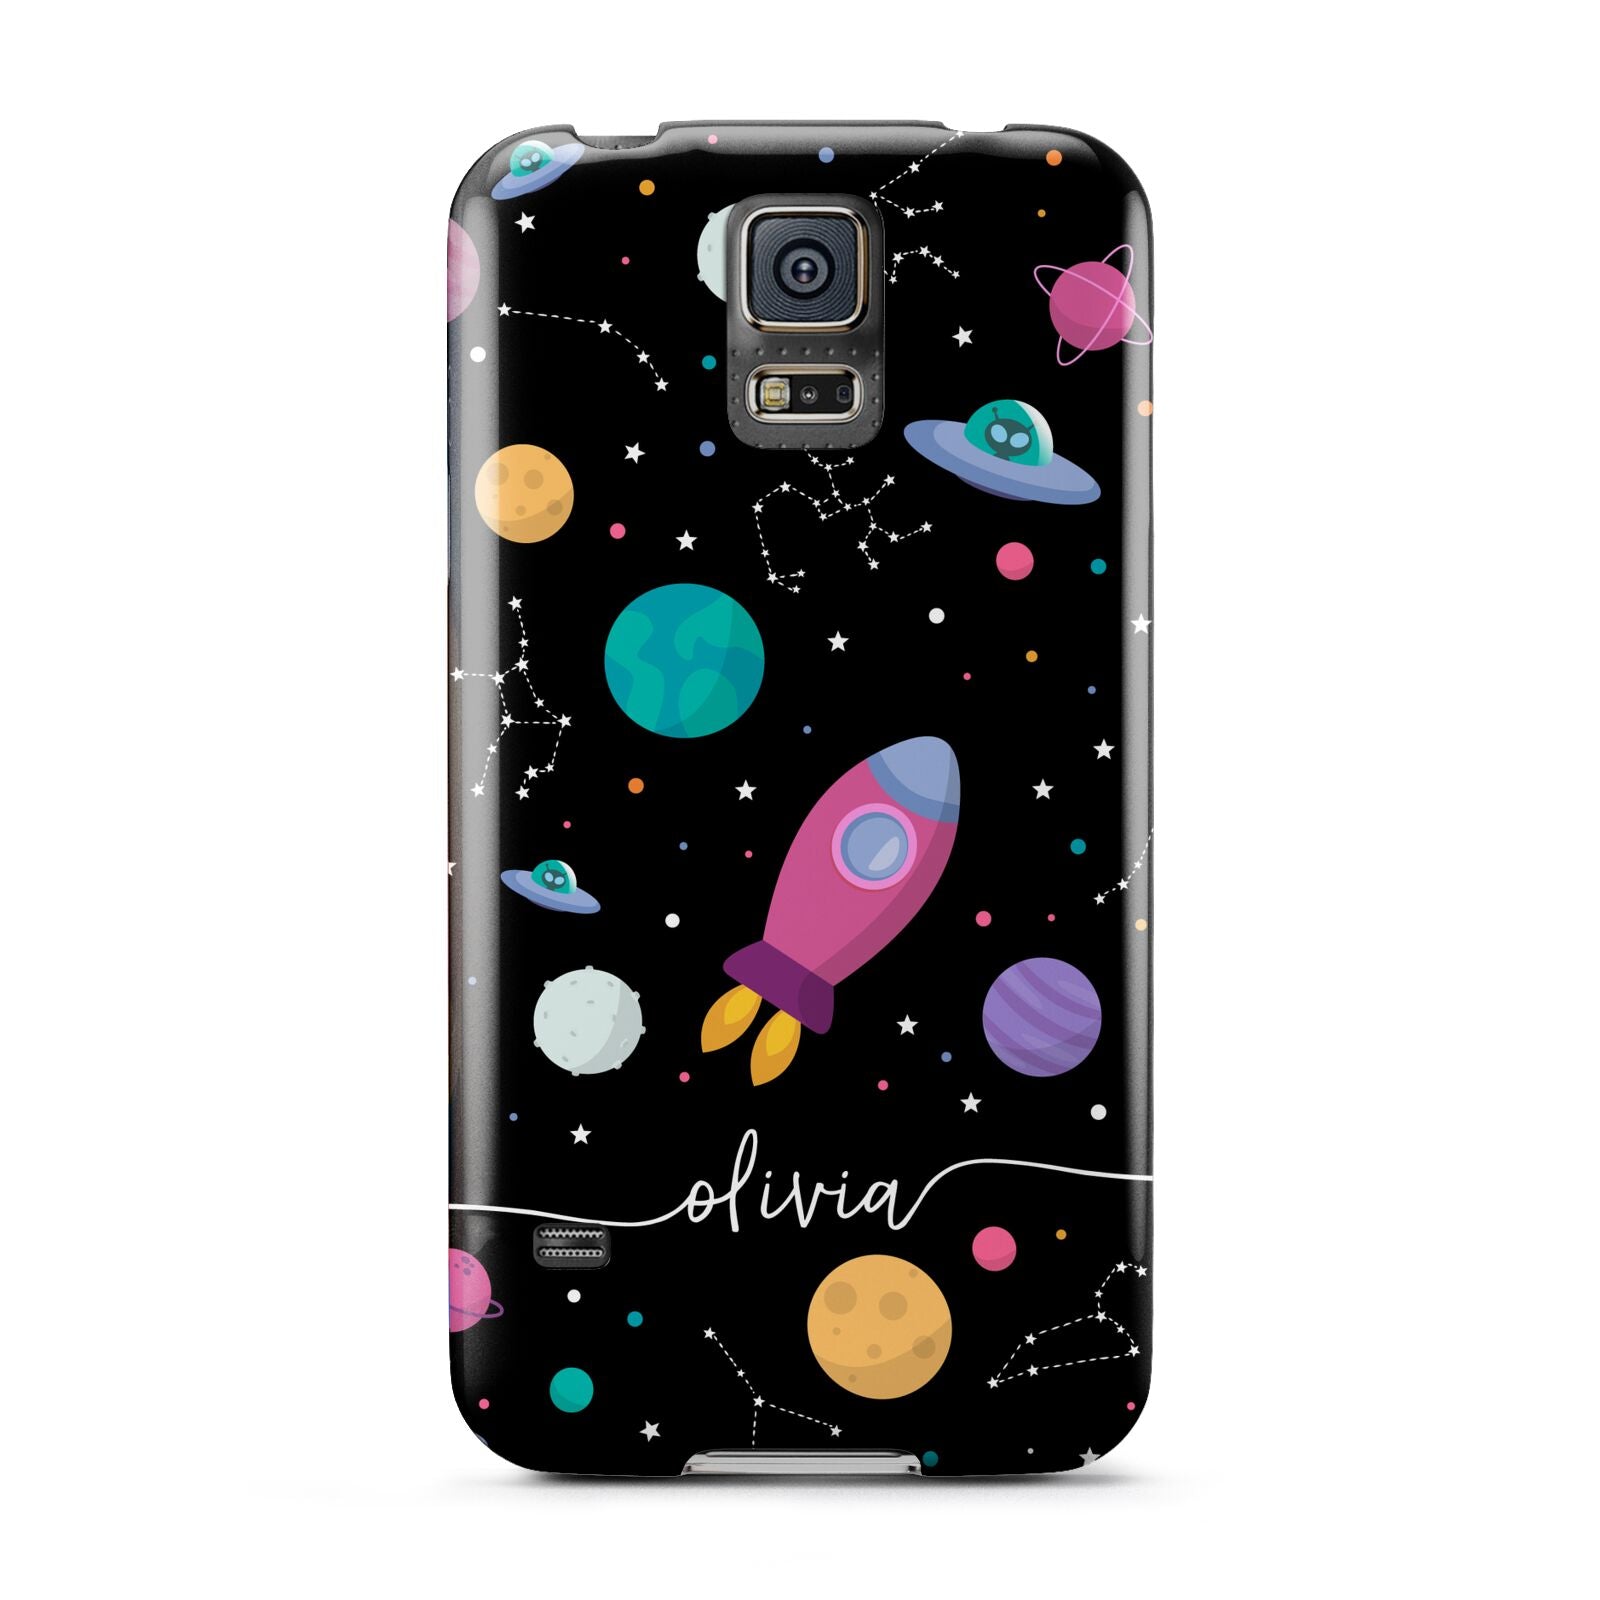 Galaxy Artwork with Name Samsung Galaxy S5 Case